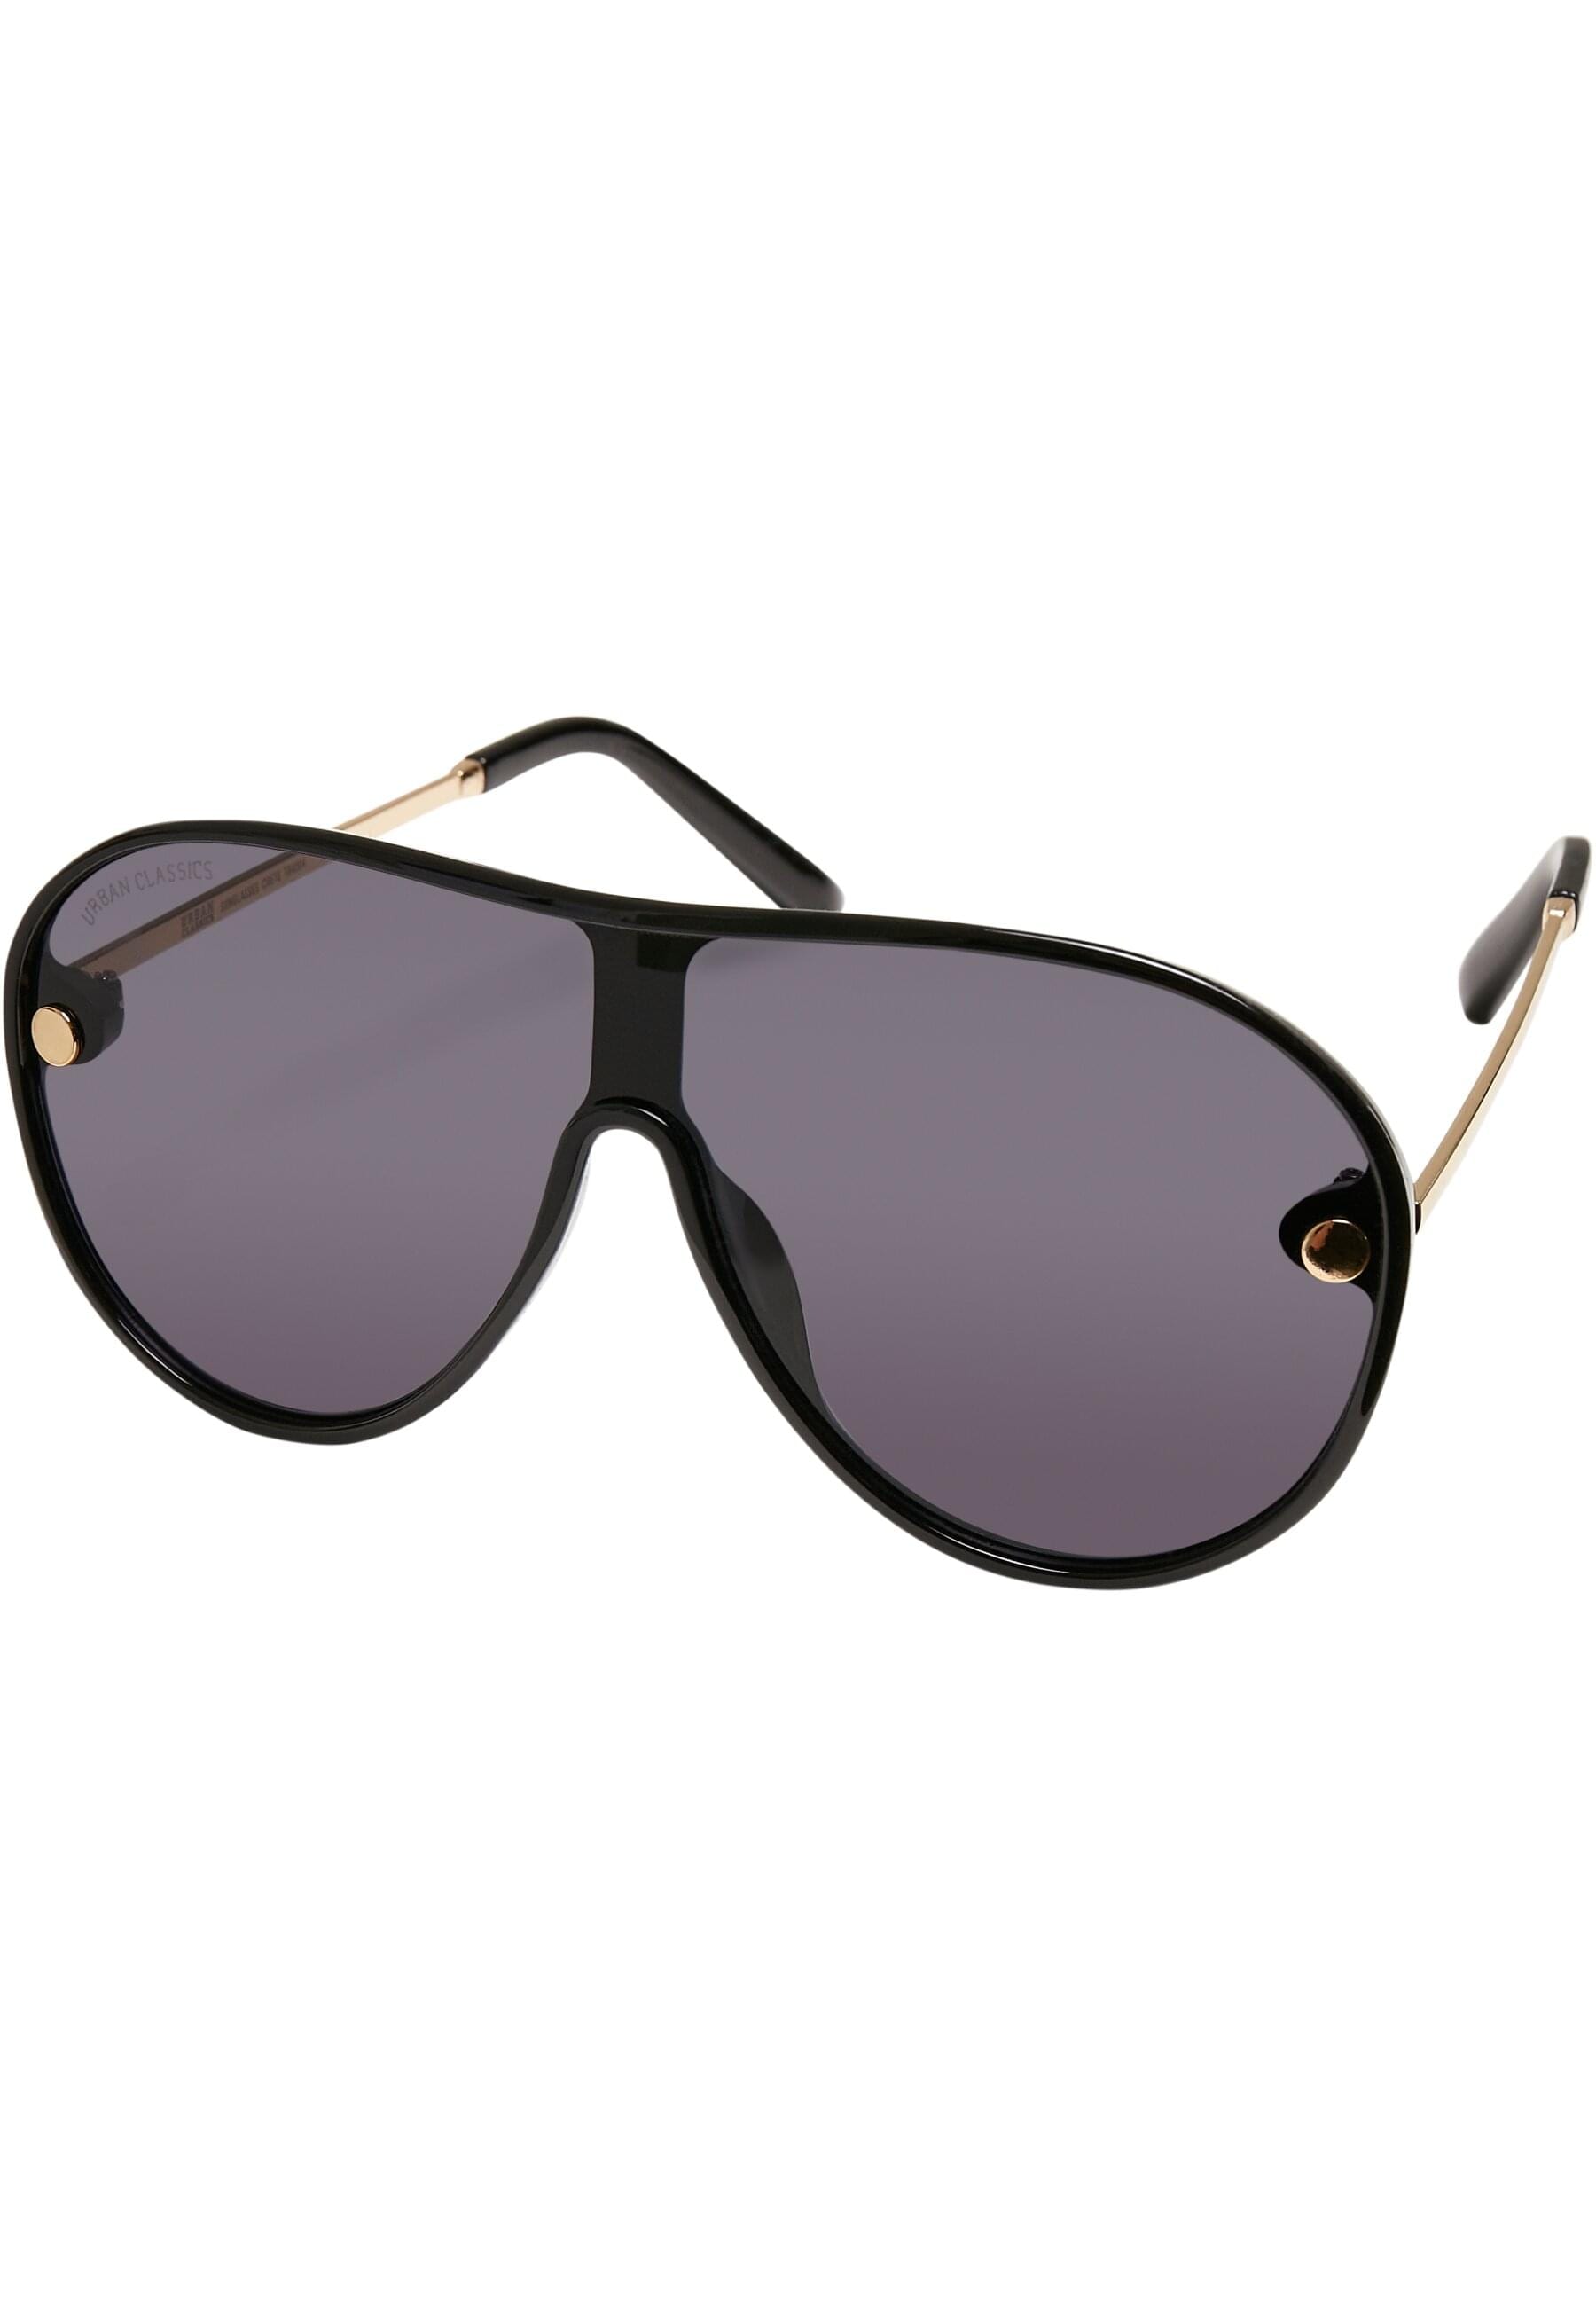 walking URBAN Sonnenbrille CLASSICS Naxos« I\'m Sunglasses | kaufen »Unisex online